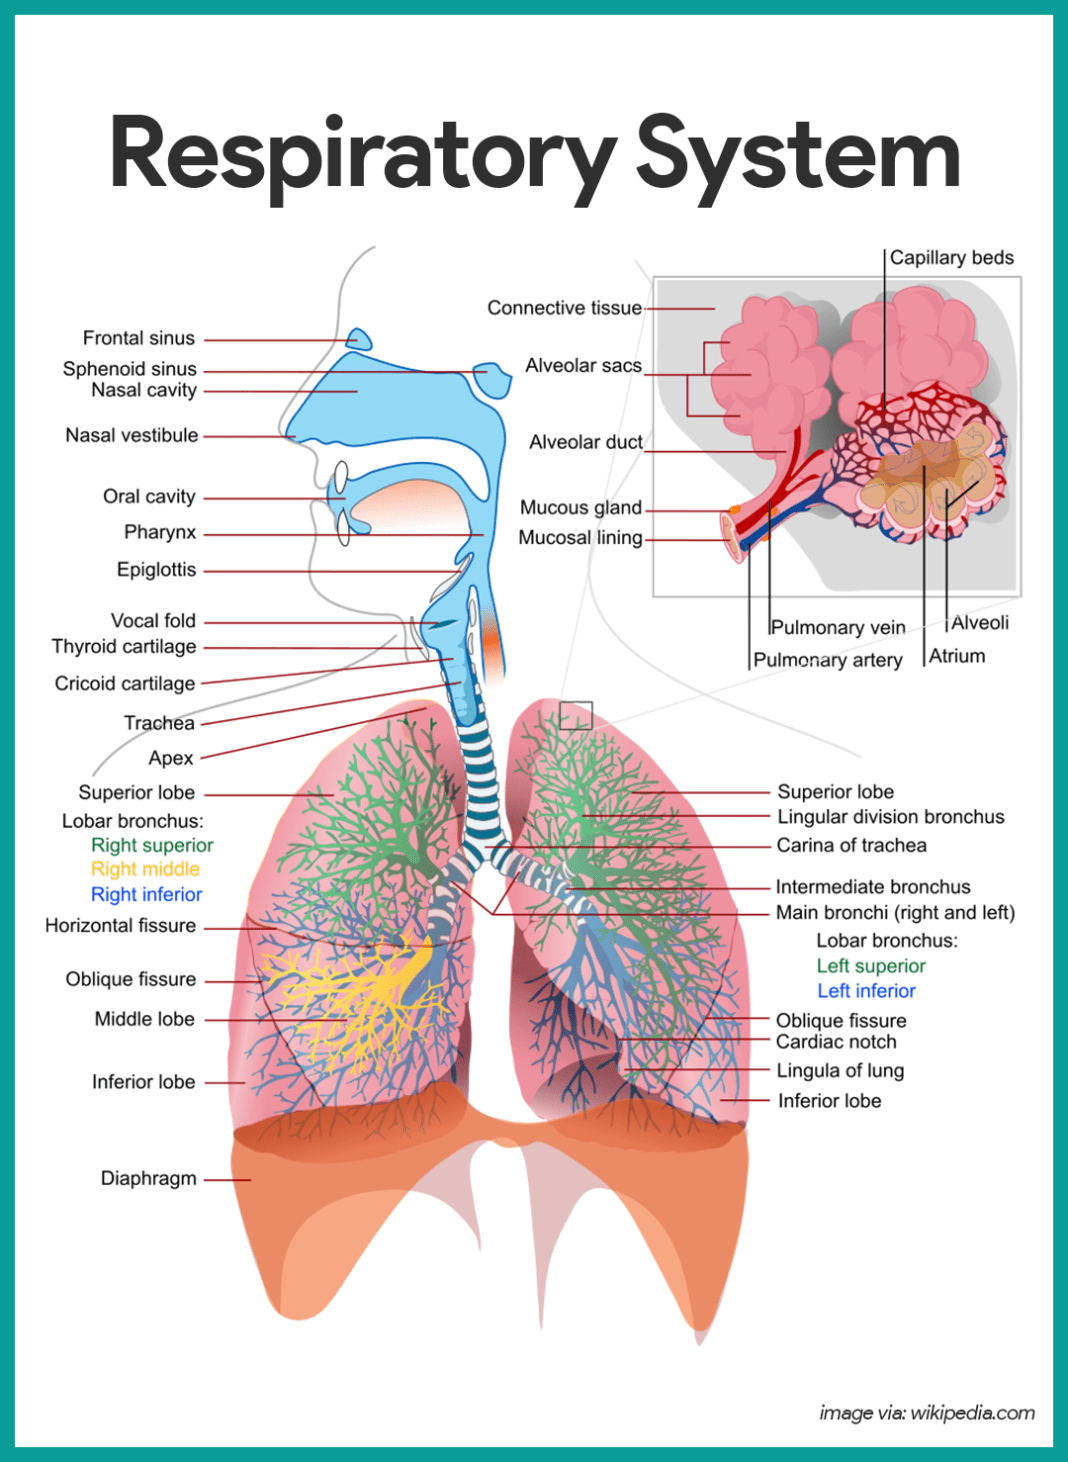 Respiratory System Anatomy and Physiology - Nurseslabs